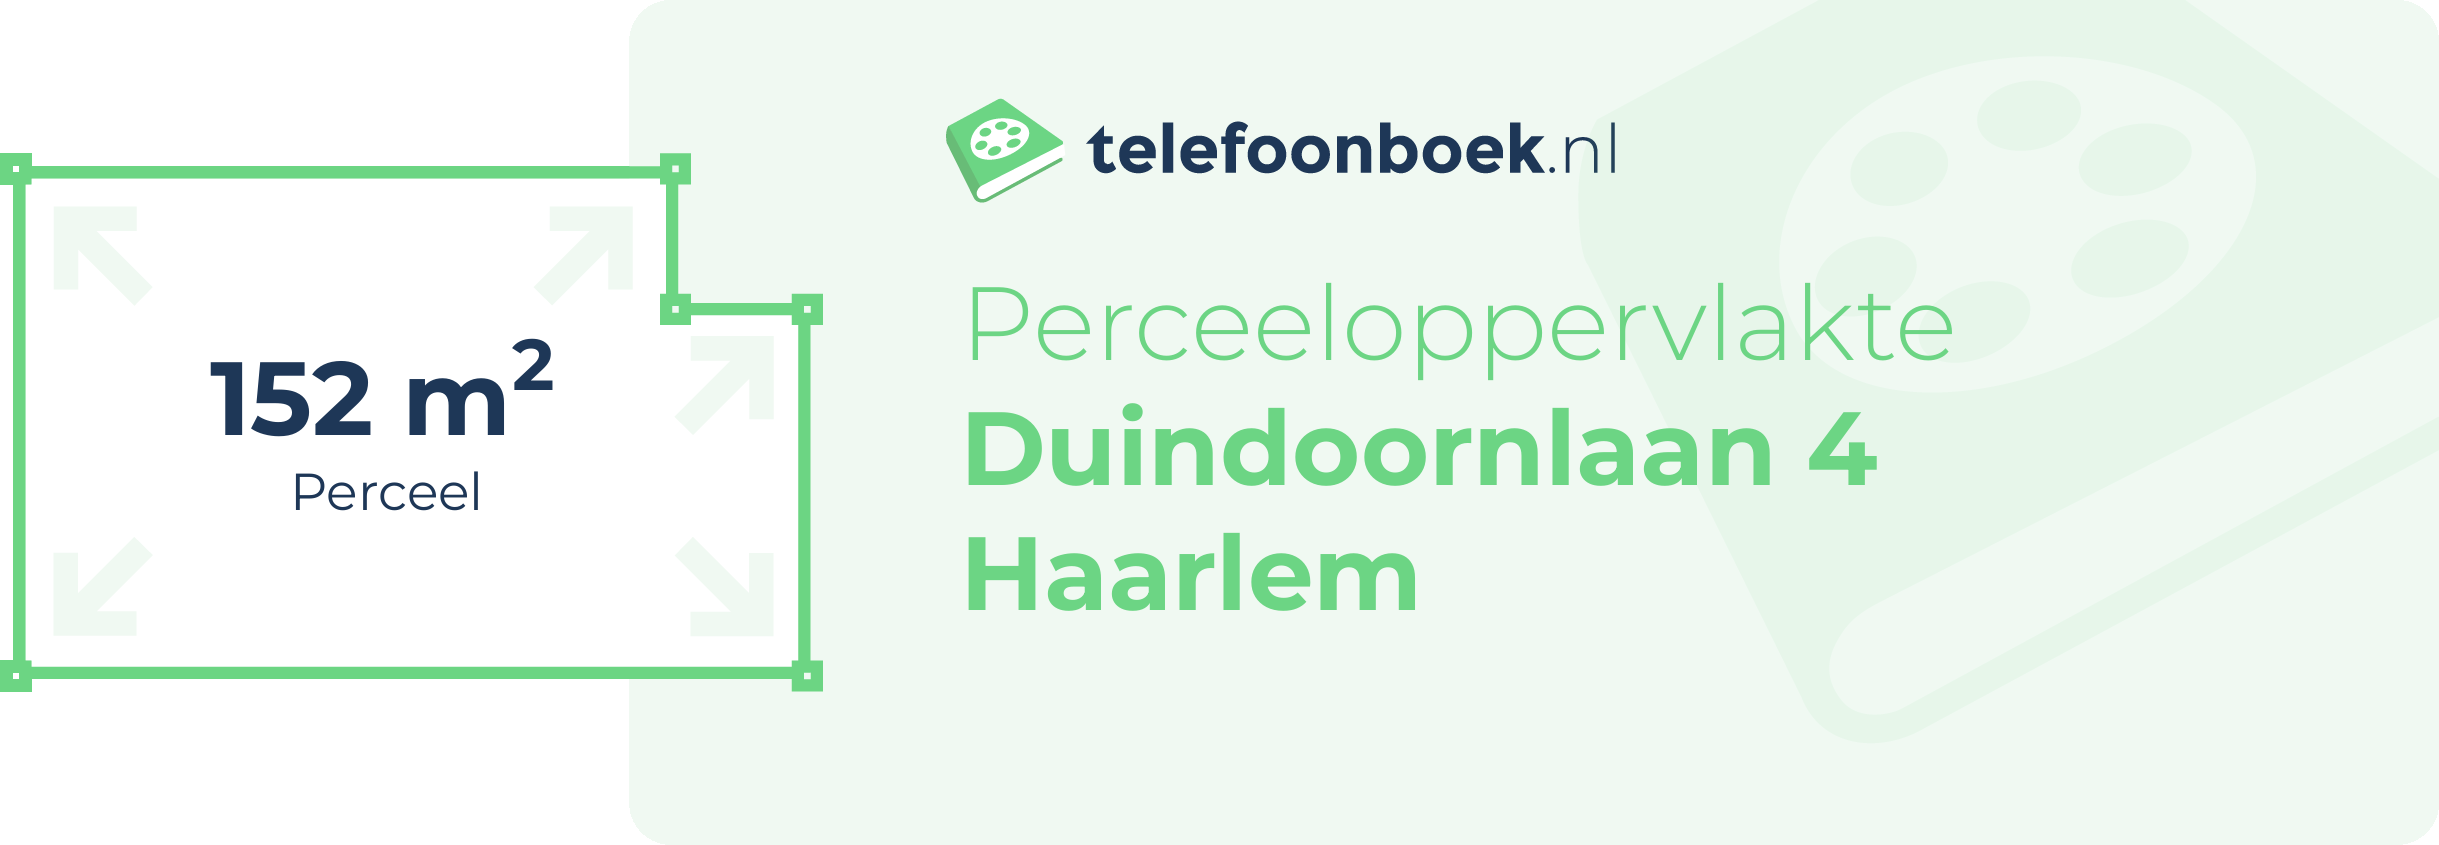 Perceeloppervlakte Duindoornlaan 4 Haarlem